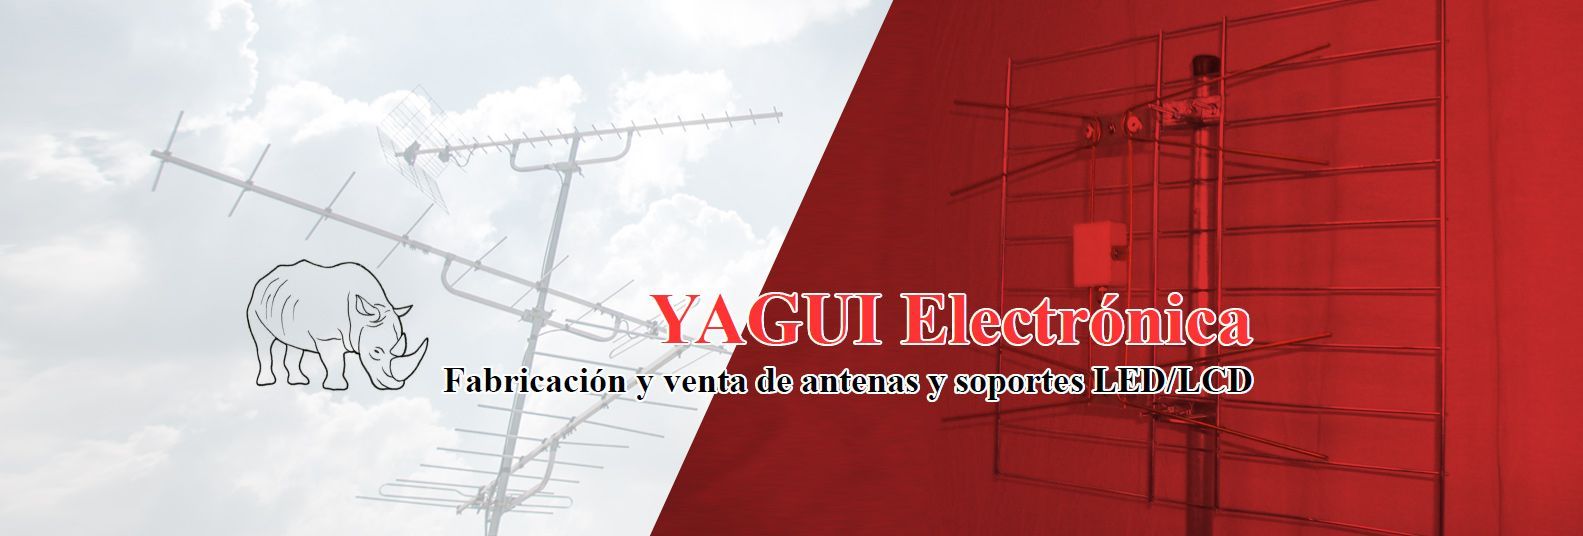 Yagui Electrónica logo